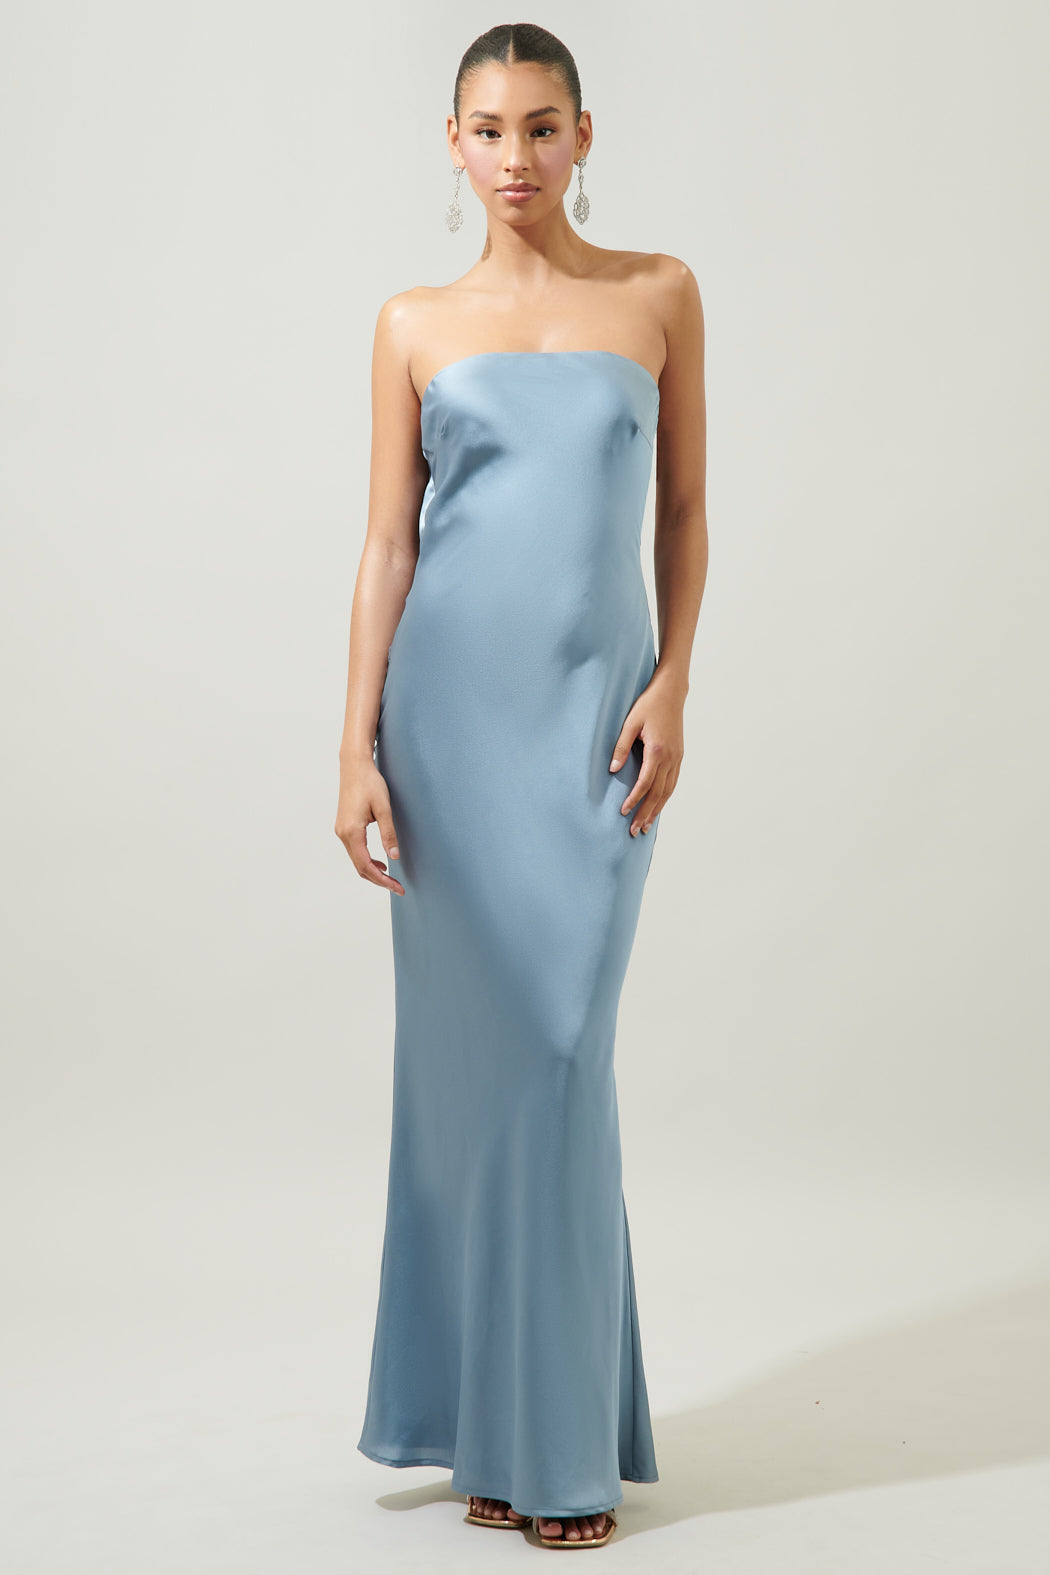 blue silver strapless dress